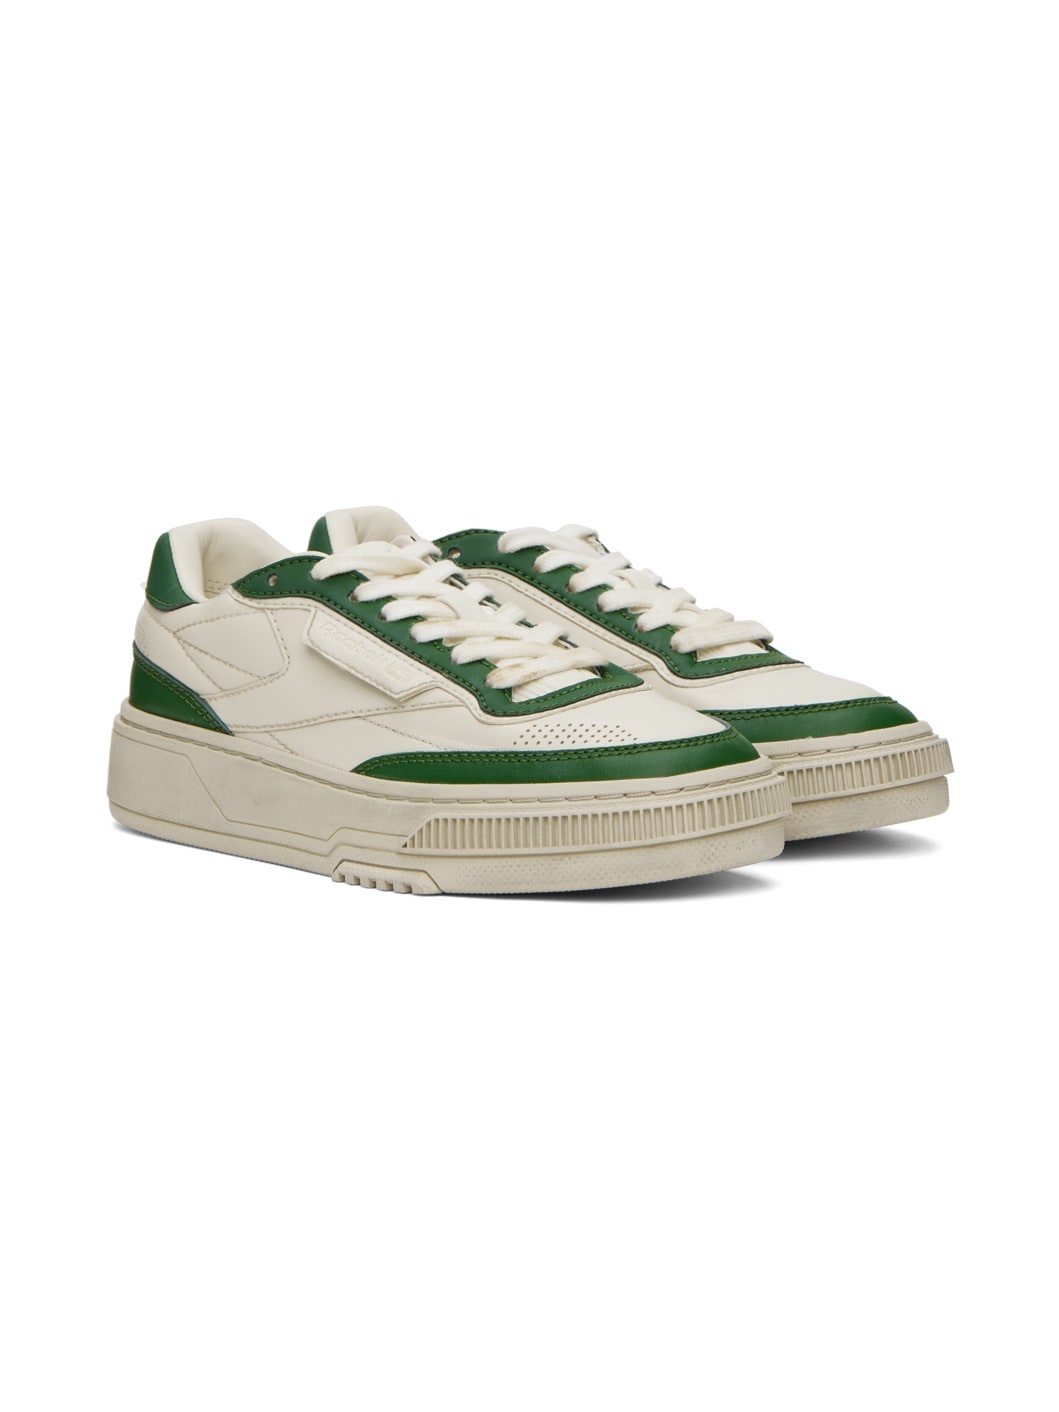 Off-White & Green Club C LTD Sneakers - 4